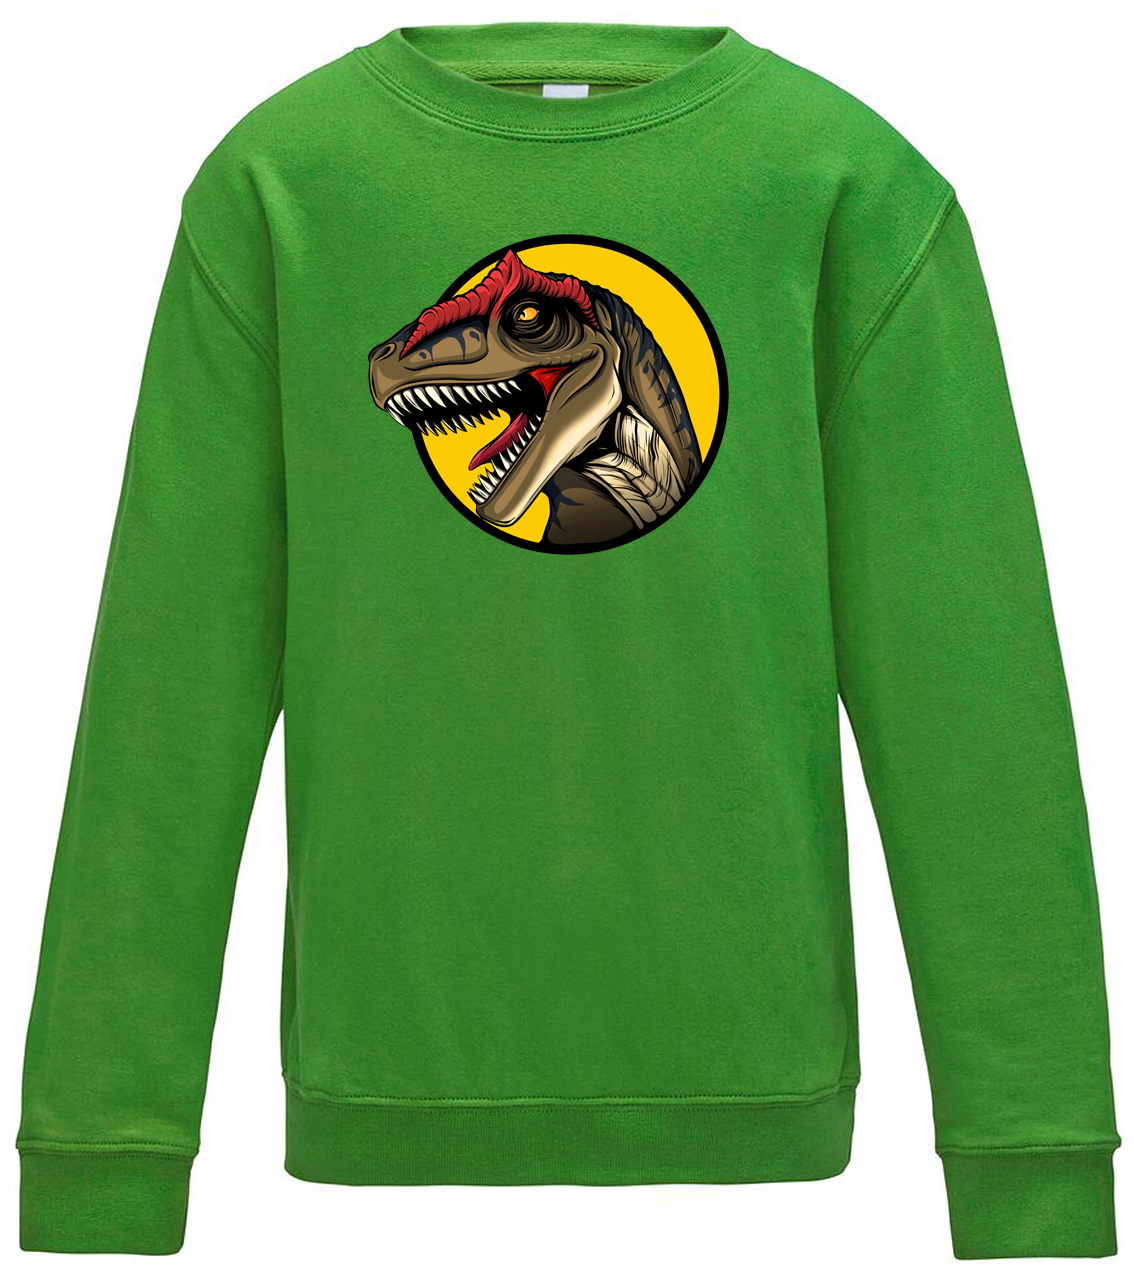 Dětská mikina s dinosaurem - Allosaurus Velikost: 5/6 (110/116), Barva: Zelená